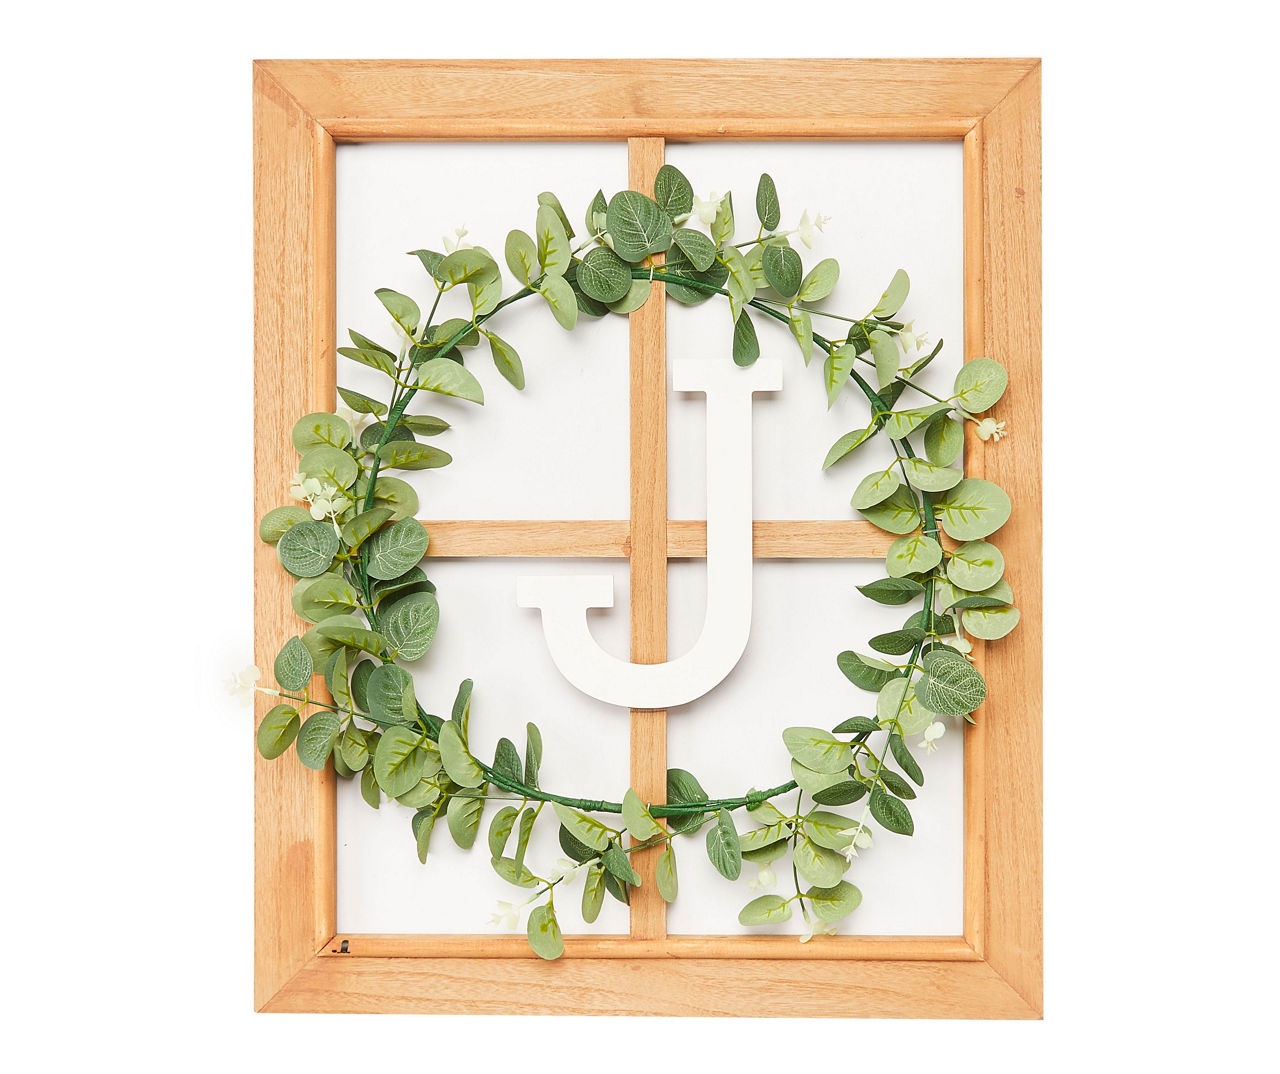 "J" Monogram Framed Windowpane Plaque with Greenery Wreath